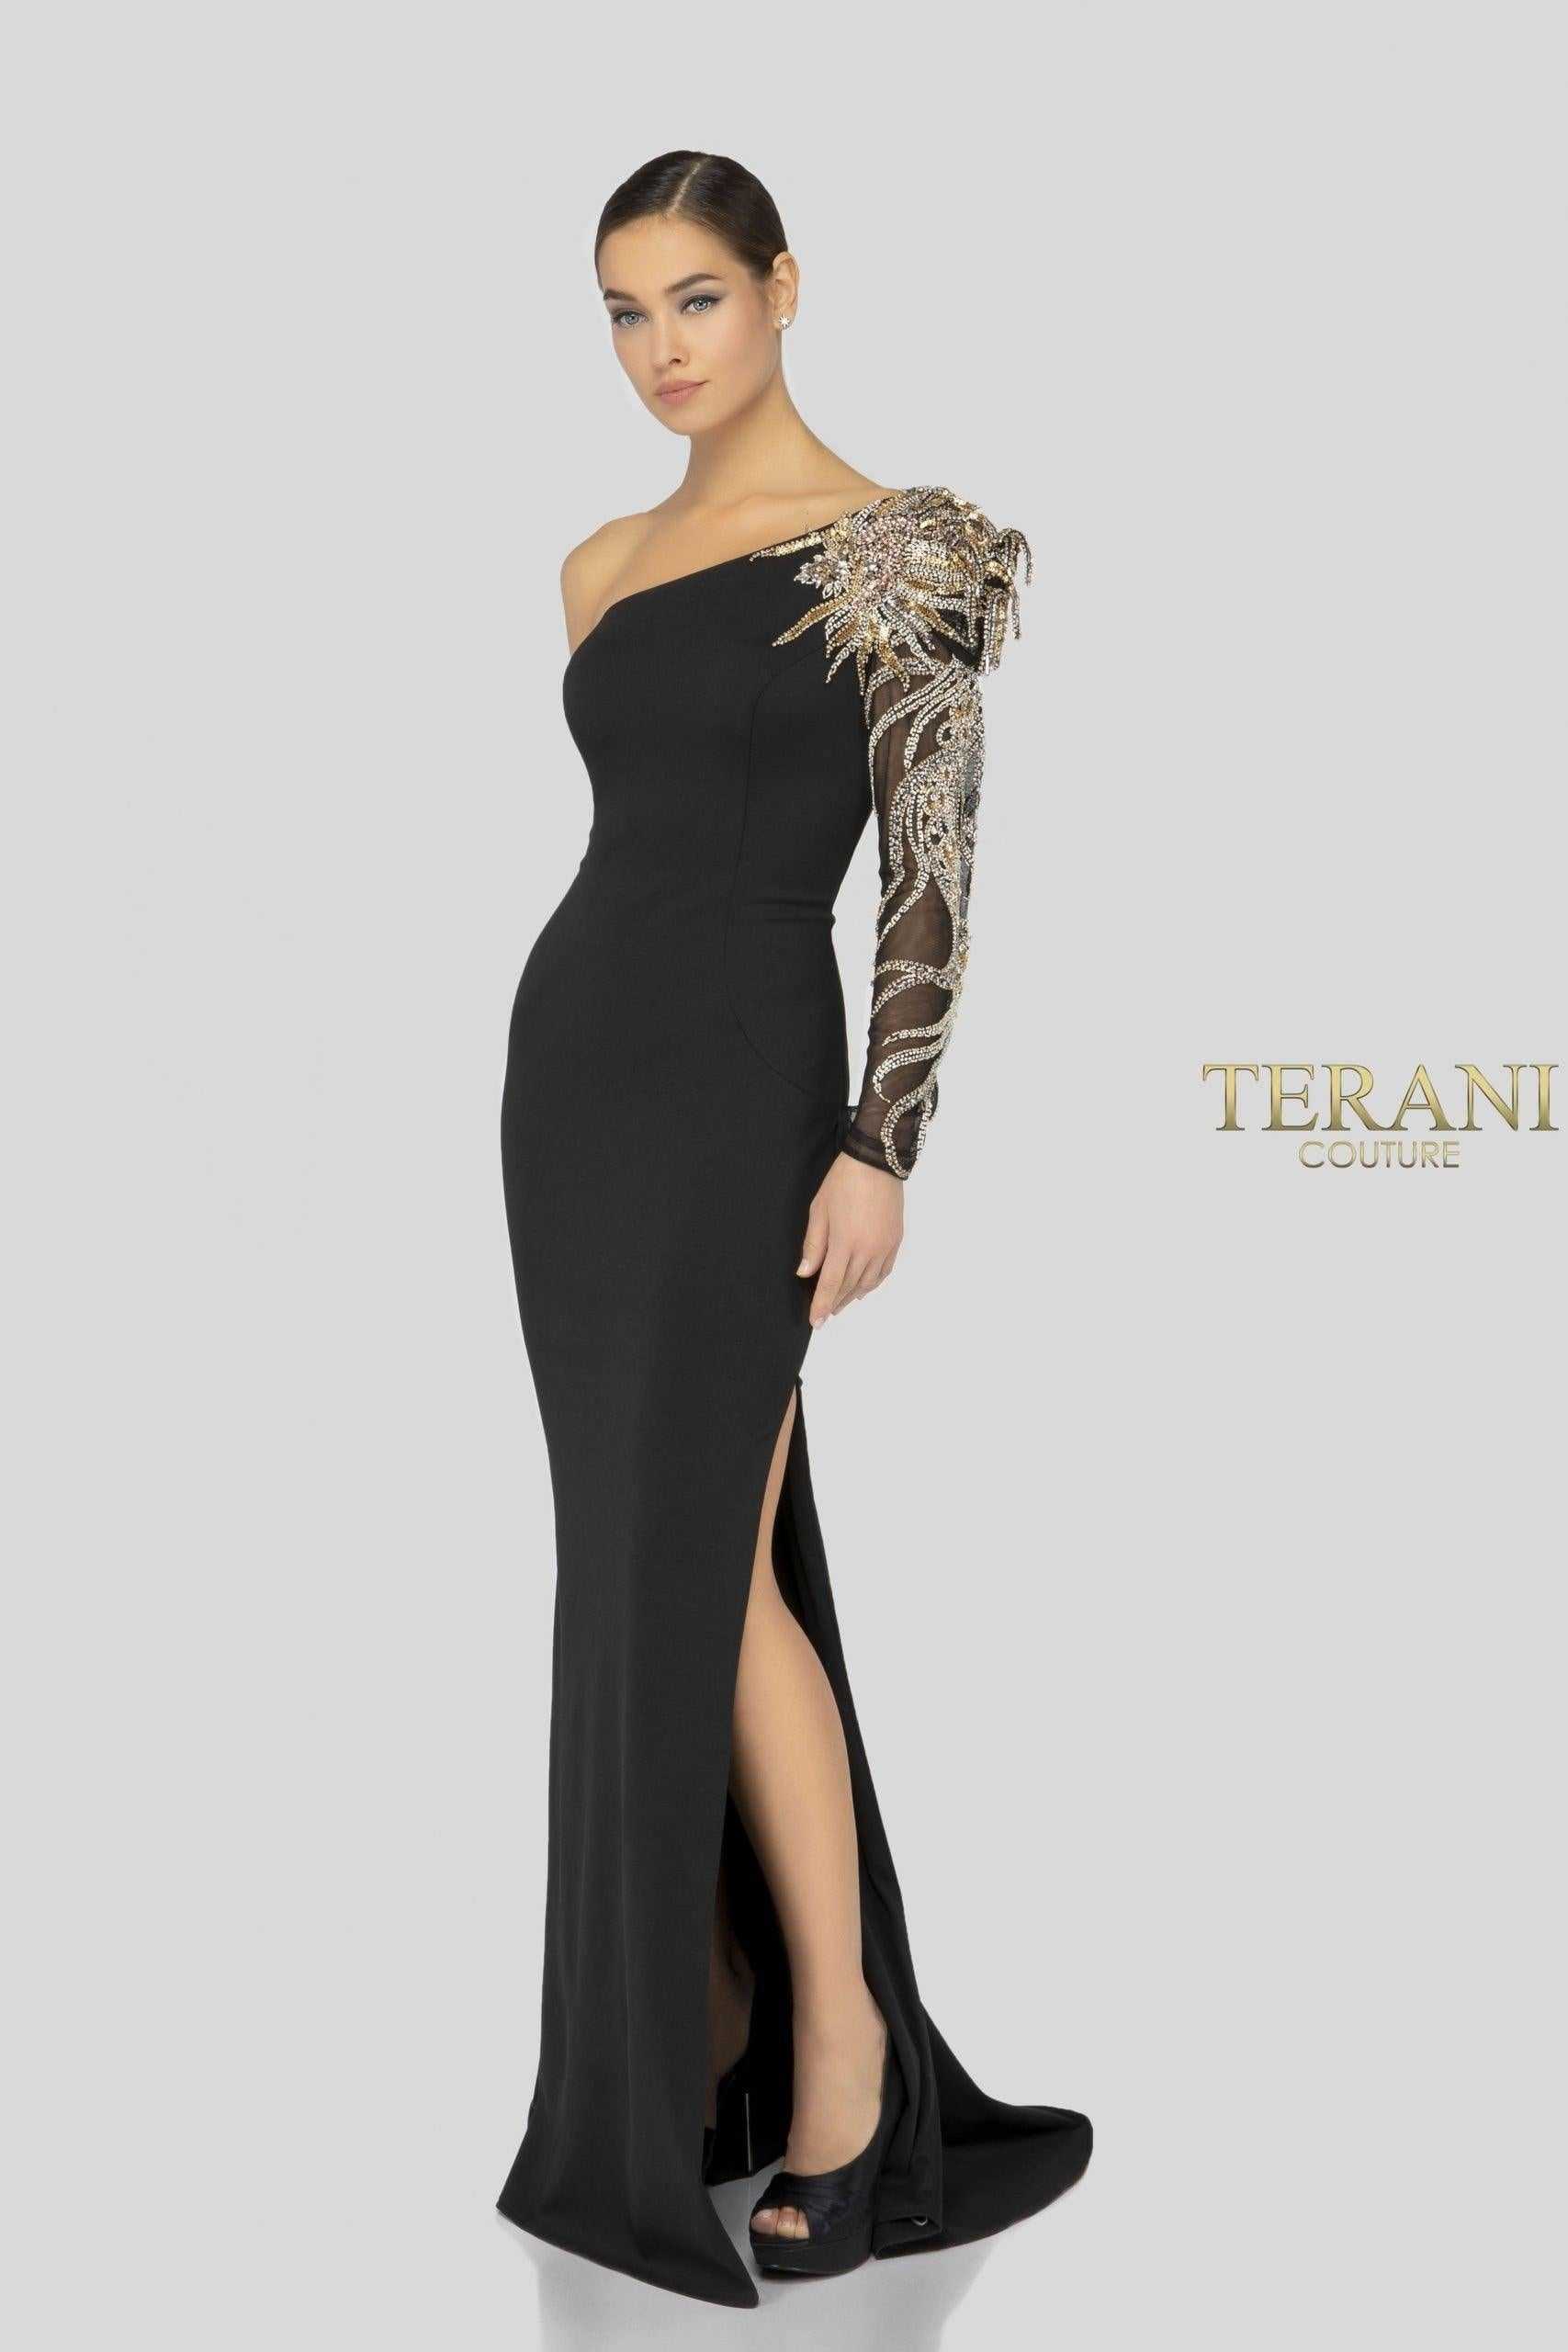 Terani Couture, Terani Couture 1911E9094 Robe de bal longue formelle